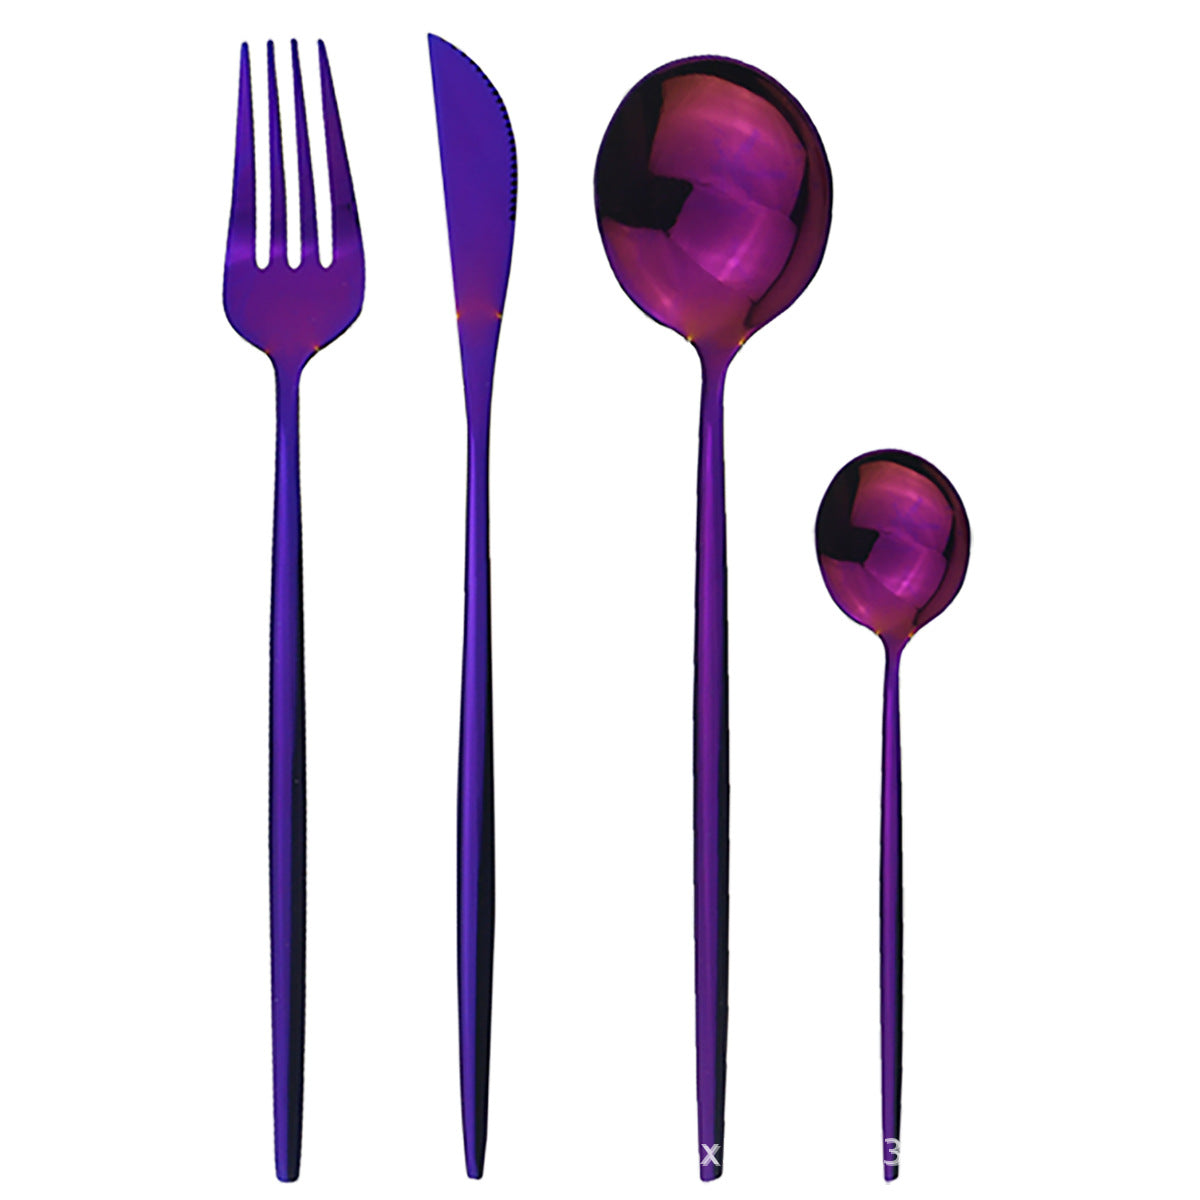 Stainless steel cutlery cutlery set - SELFTRITSS